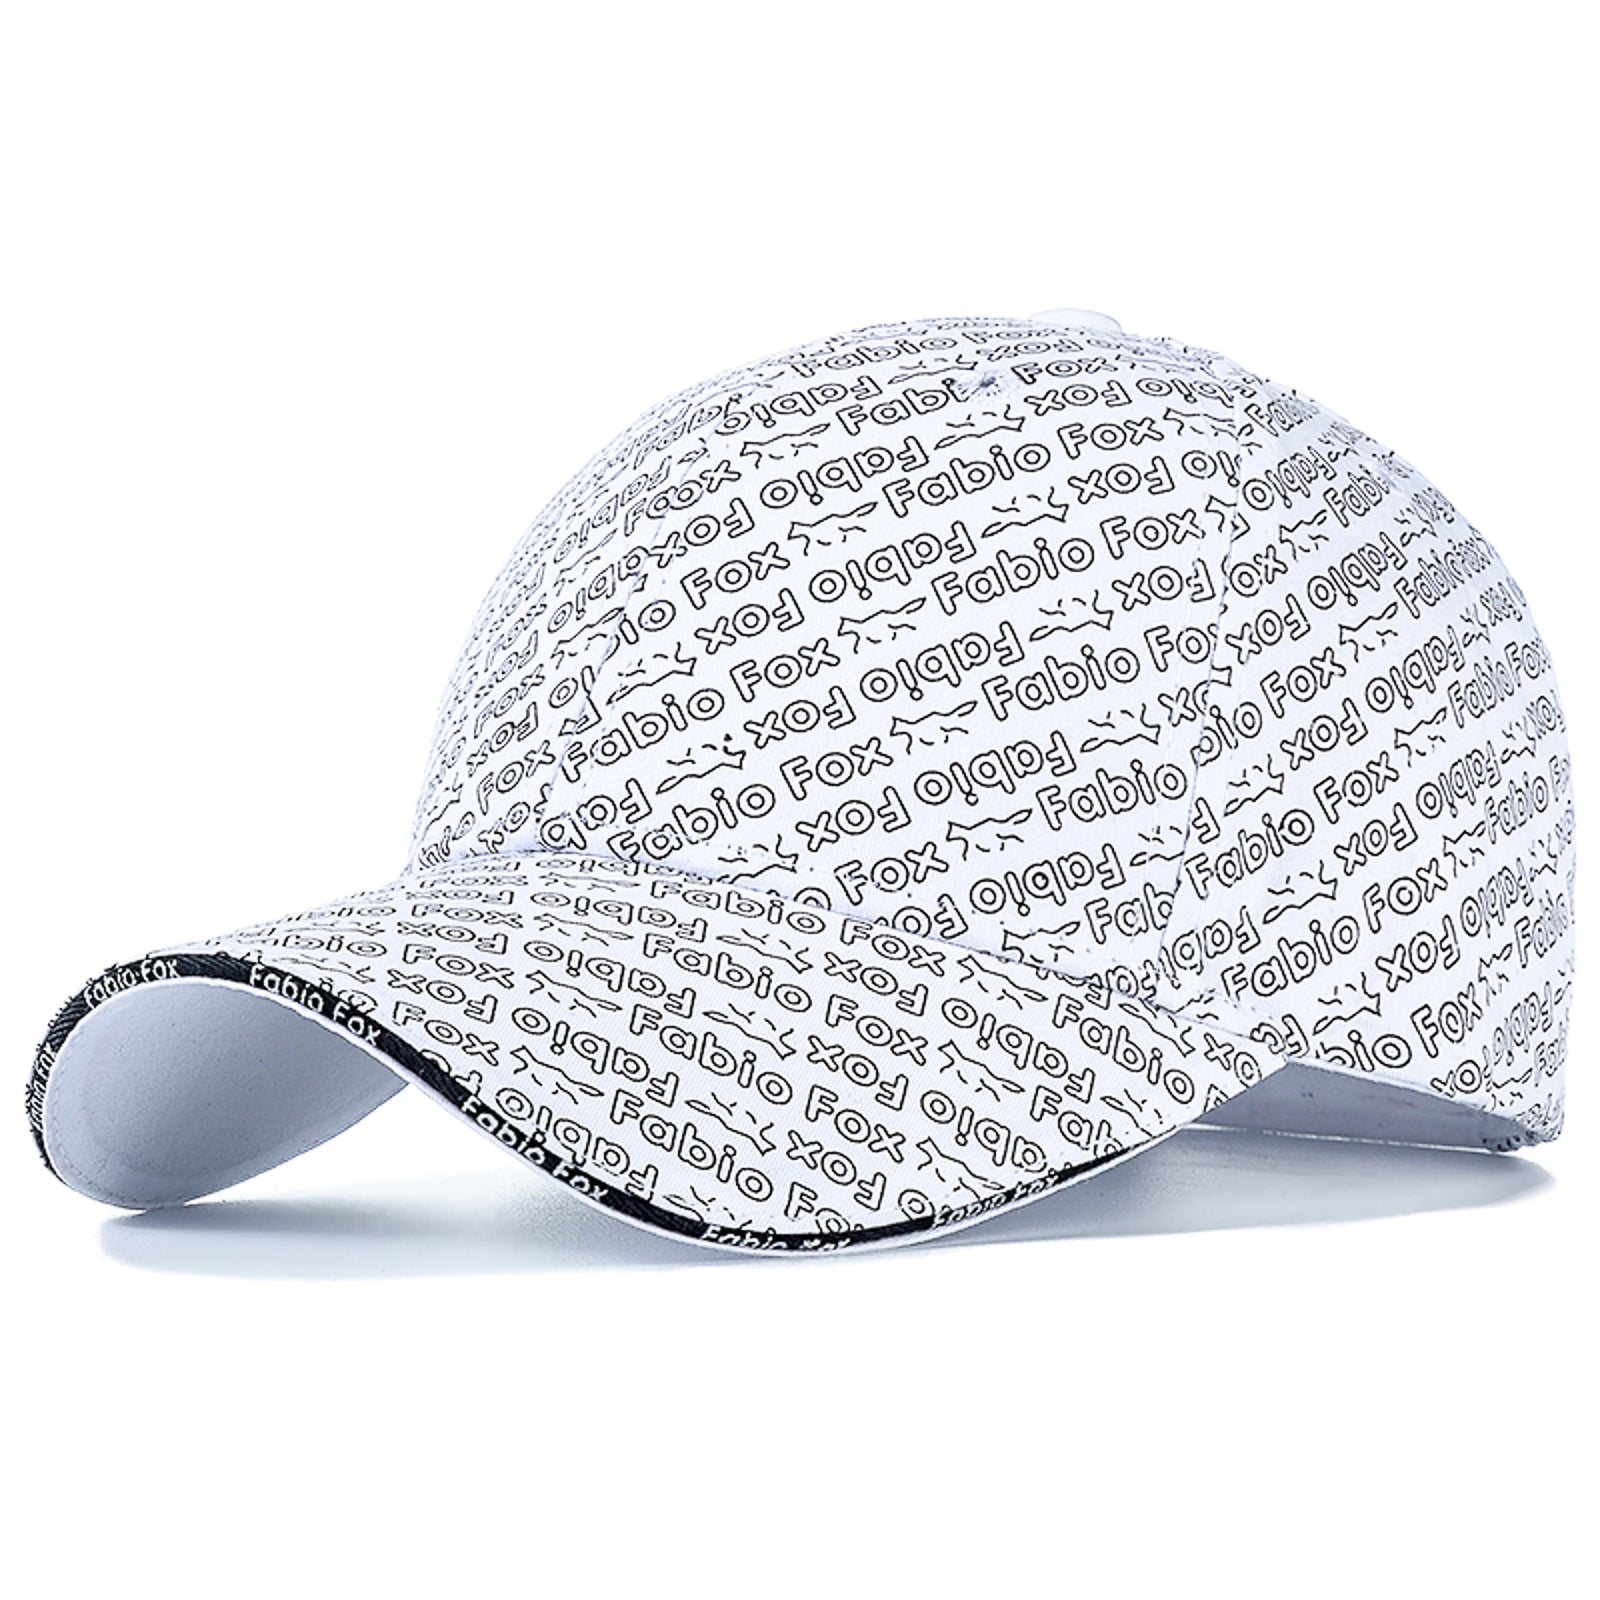 Brand Stylish Cotton Hats For Women Fashion Full Letter & Fox Animal Print Baseball Cap Female Outdoor Popular Hat Cap